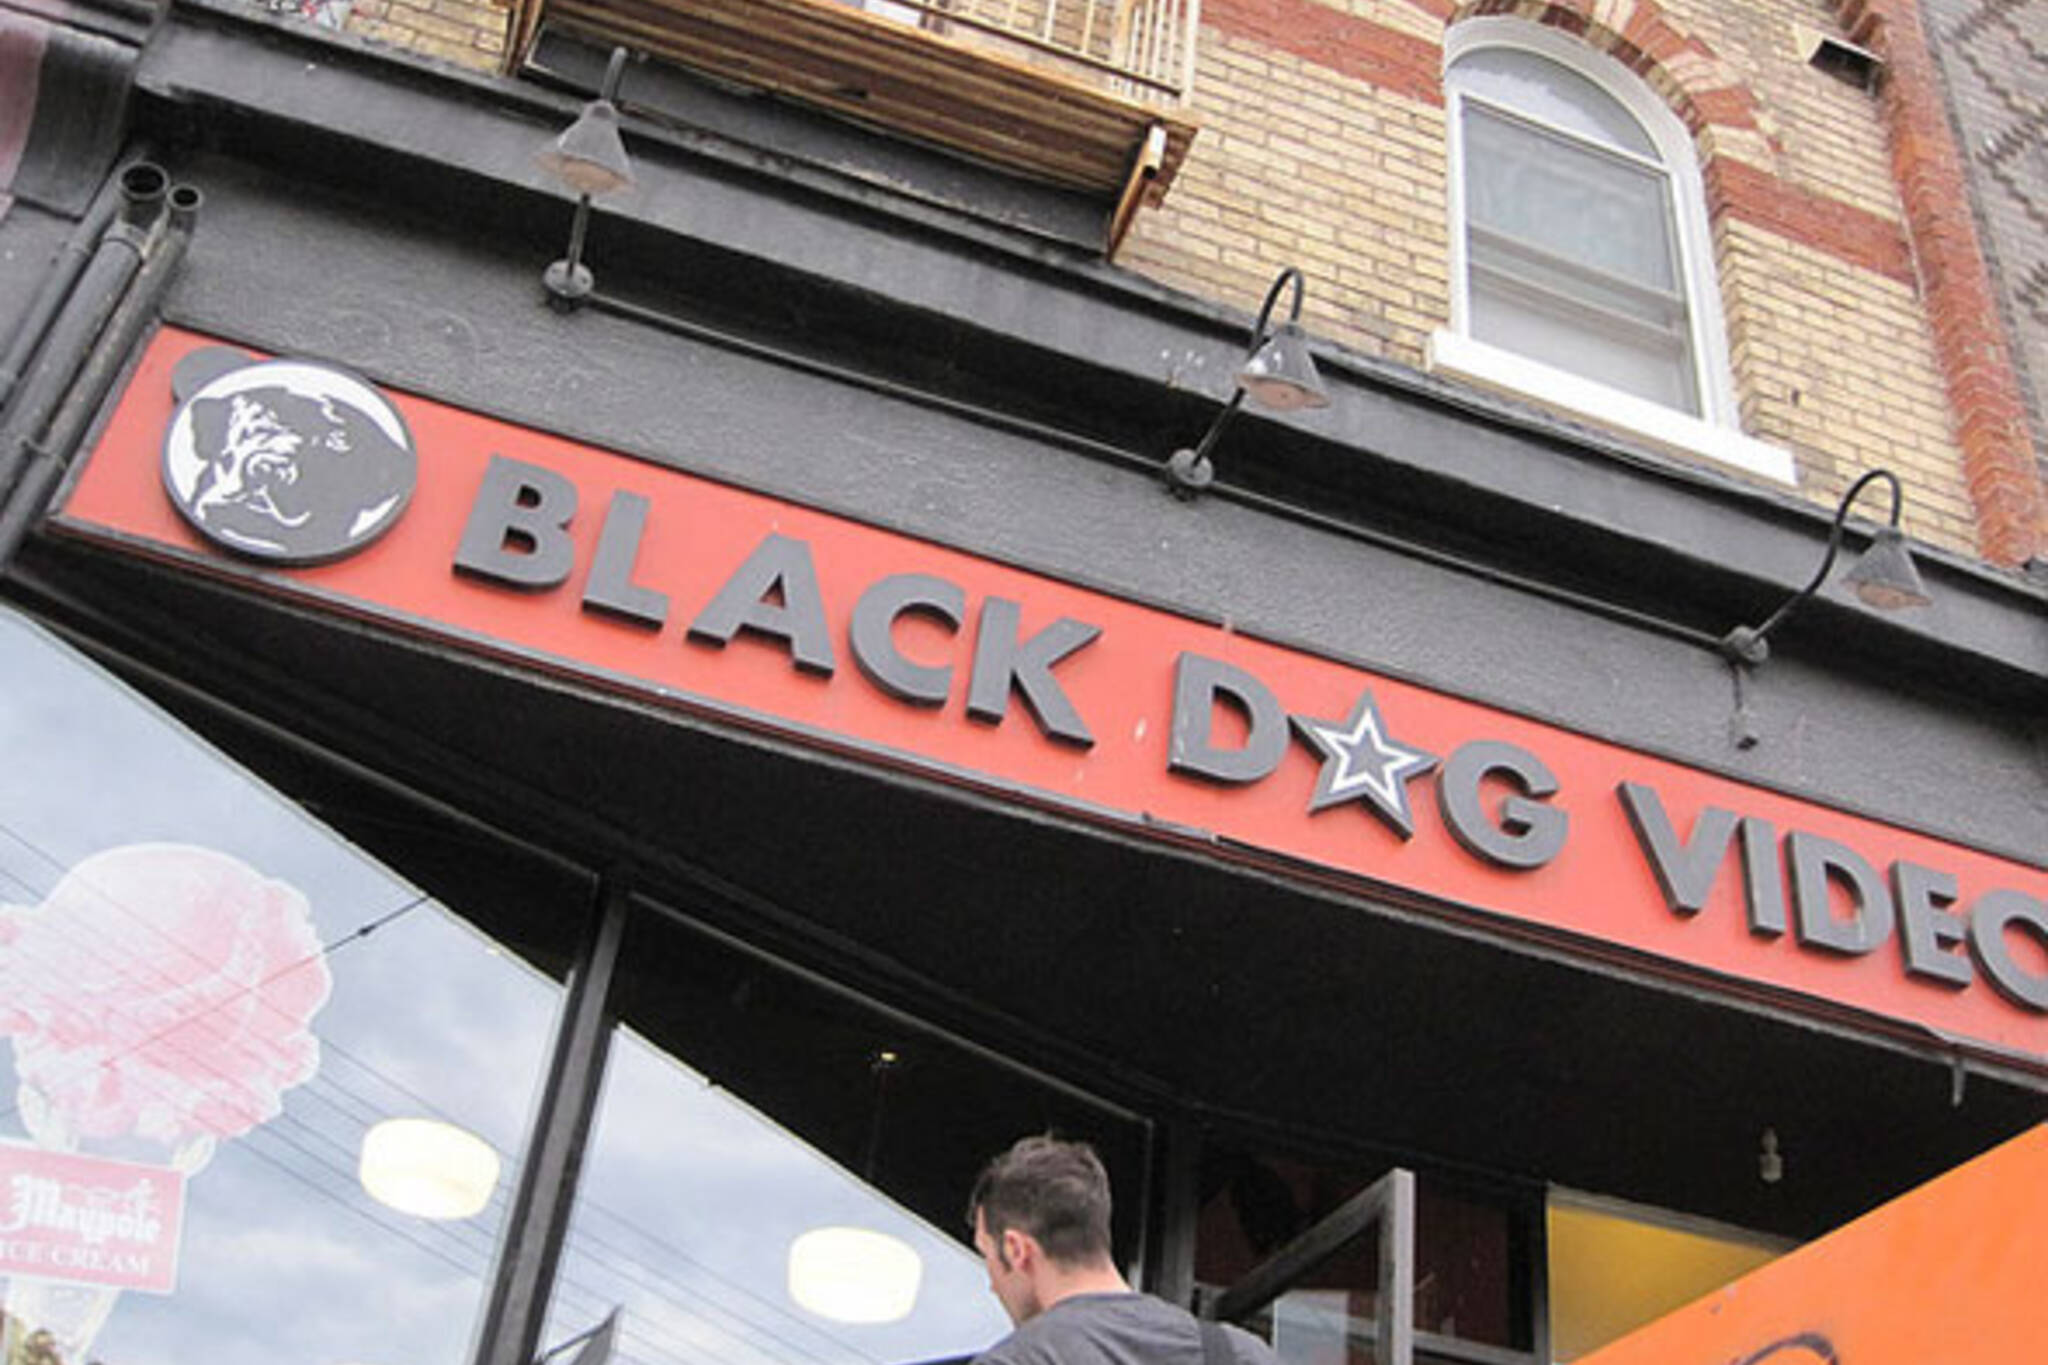 Black Dog Video Toronto